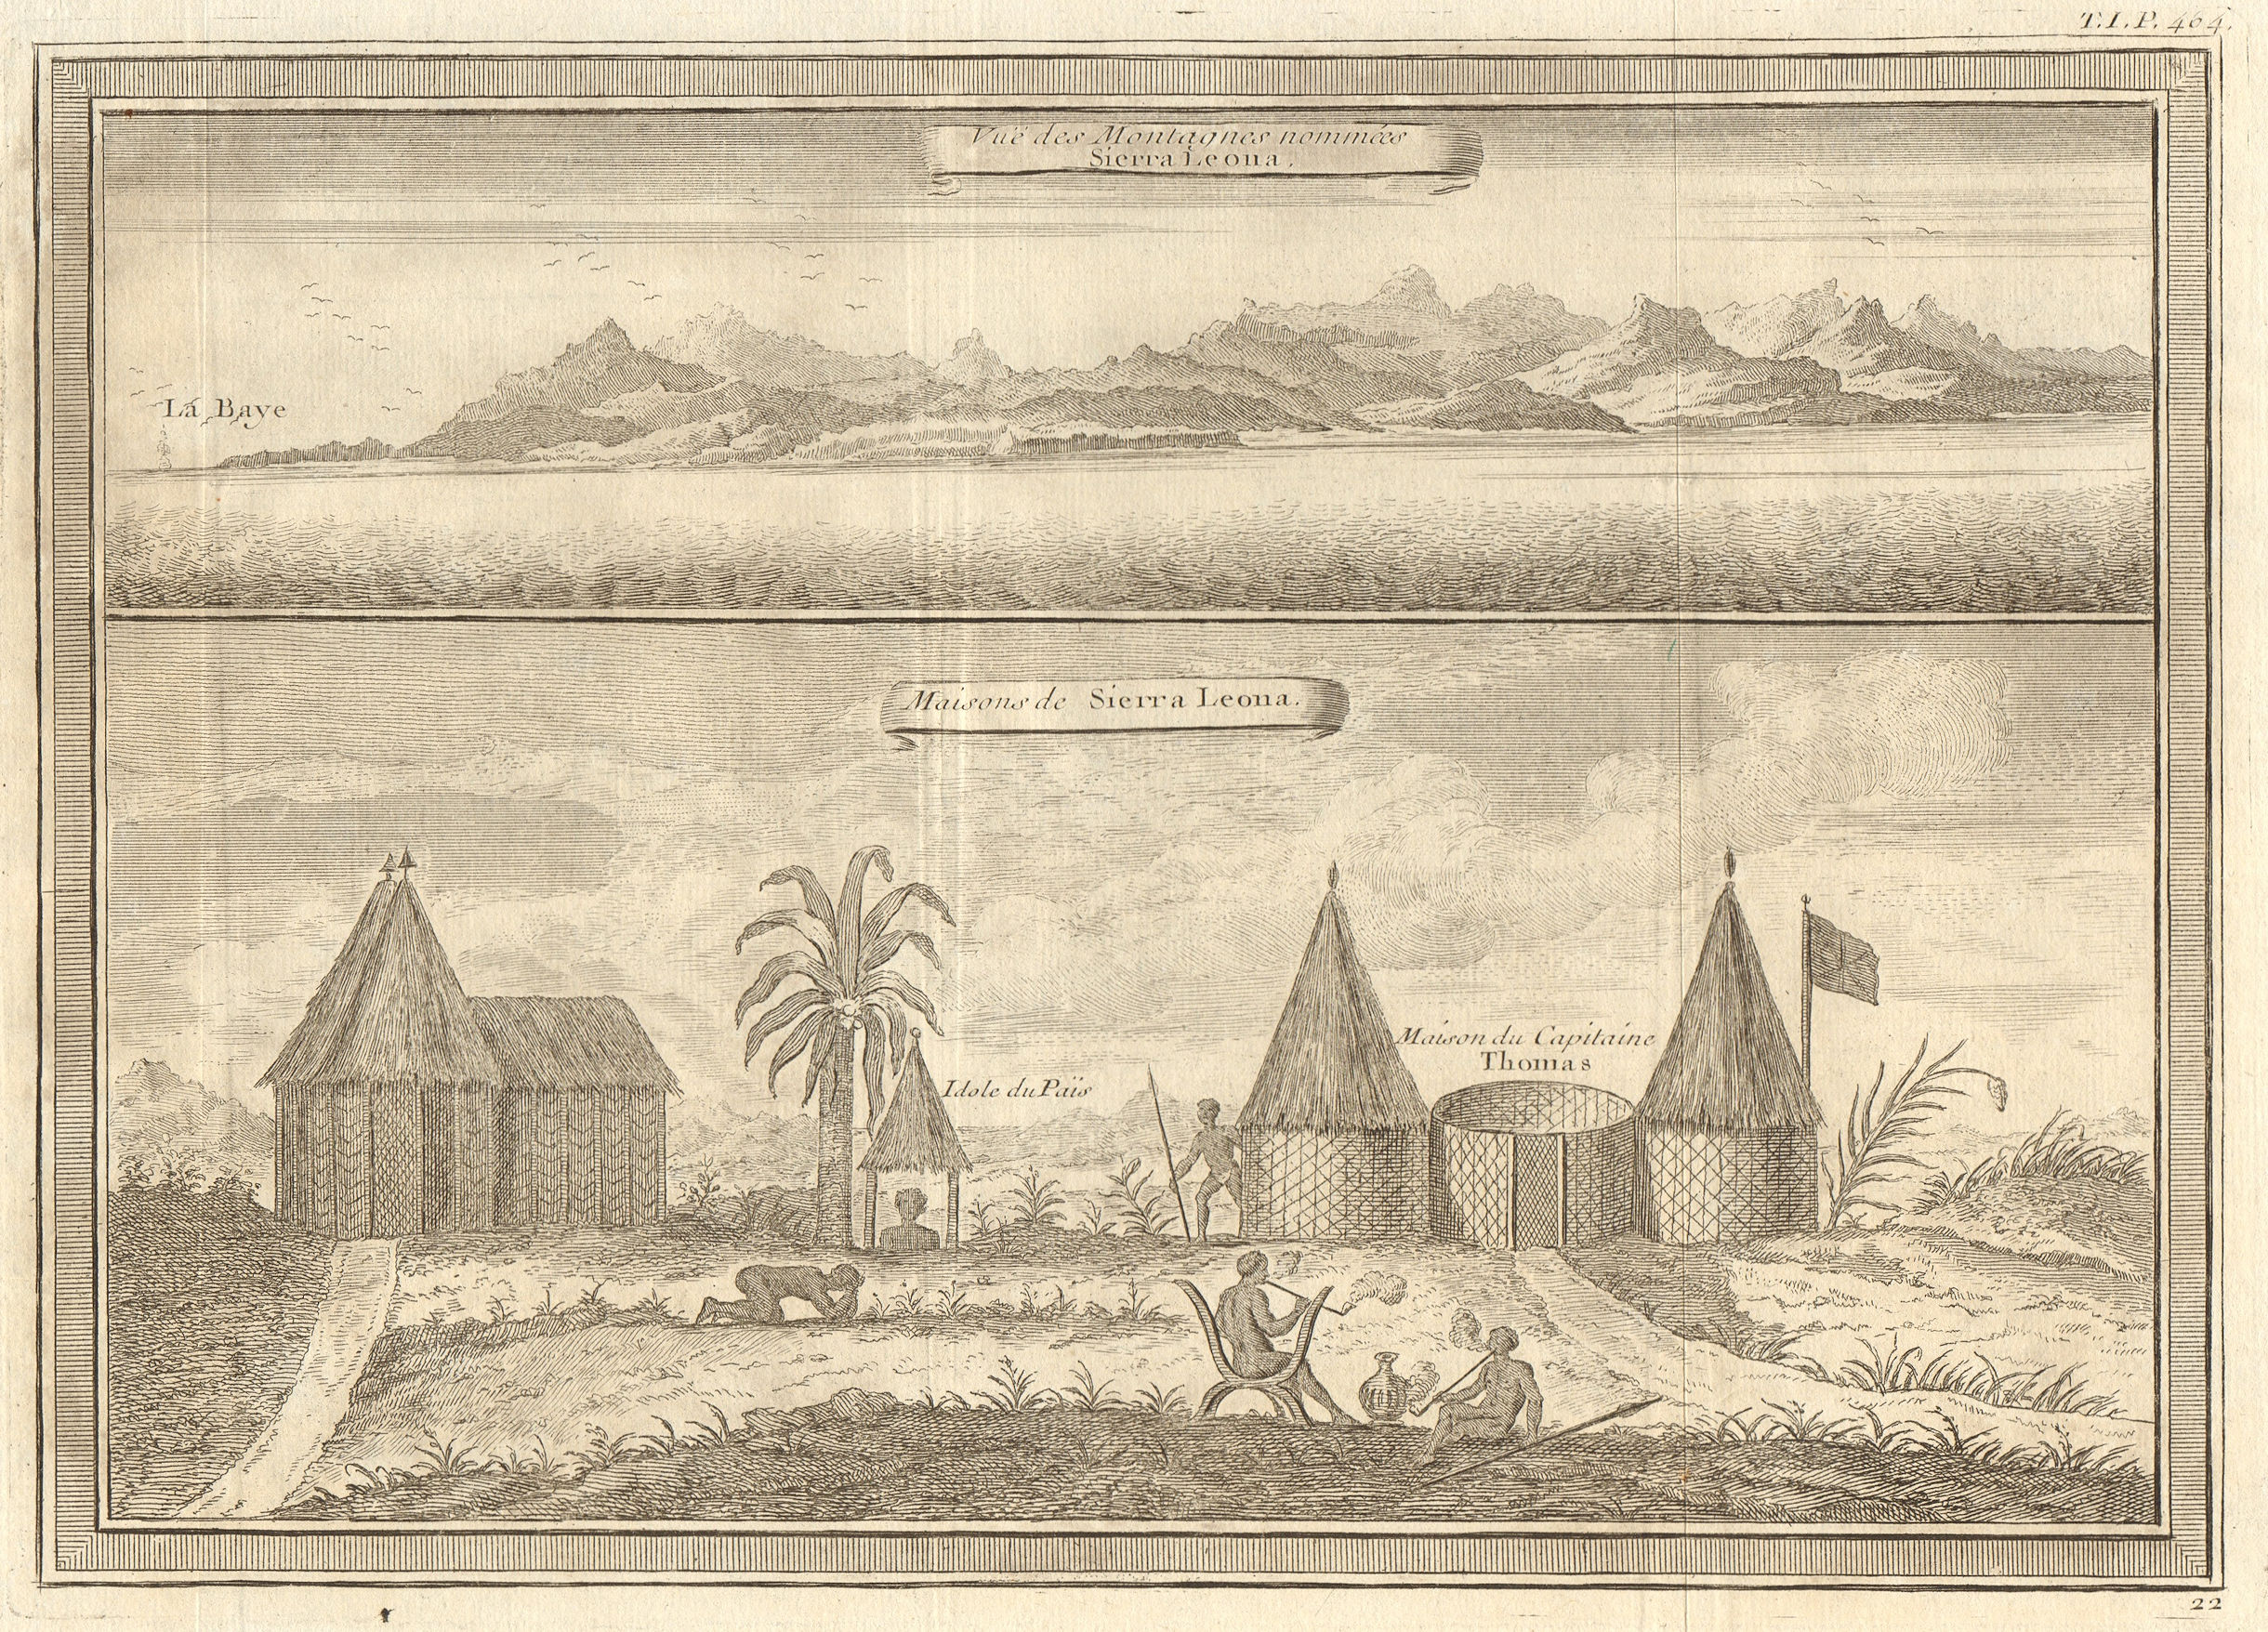 Associate Product The mountains & coast of Sierra Leone. Capt Thomas's house. Thomas Peters 1746